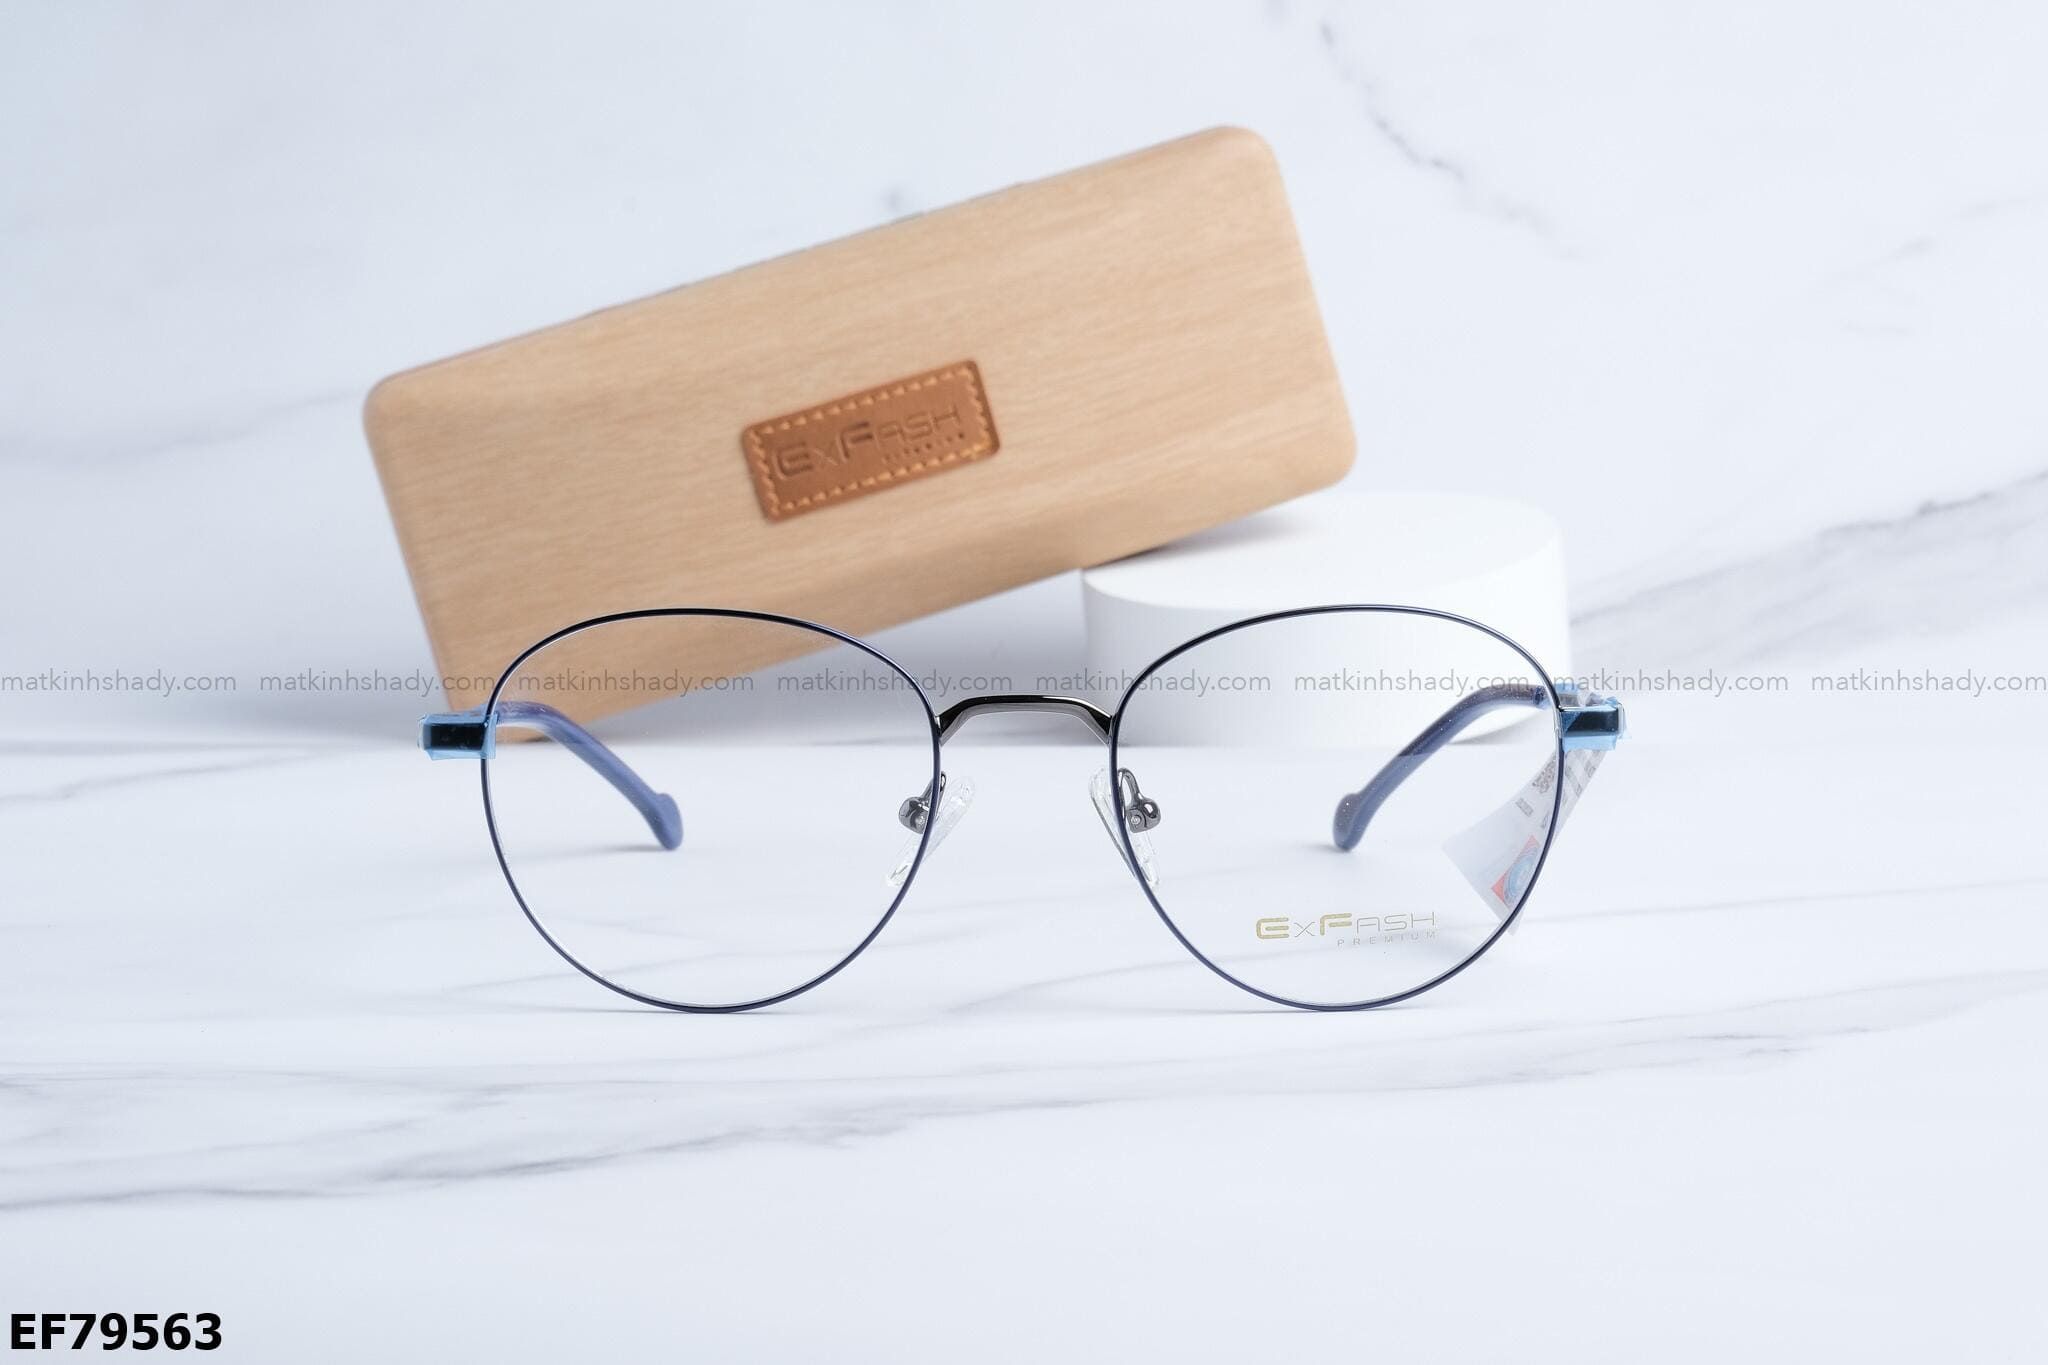  Exfash Eyewear - Glasses - EF79563 